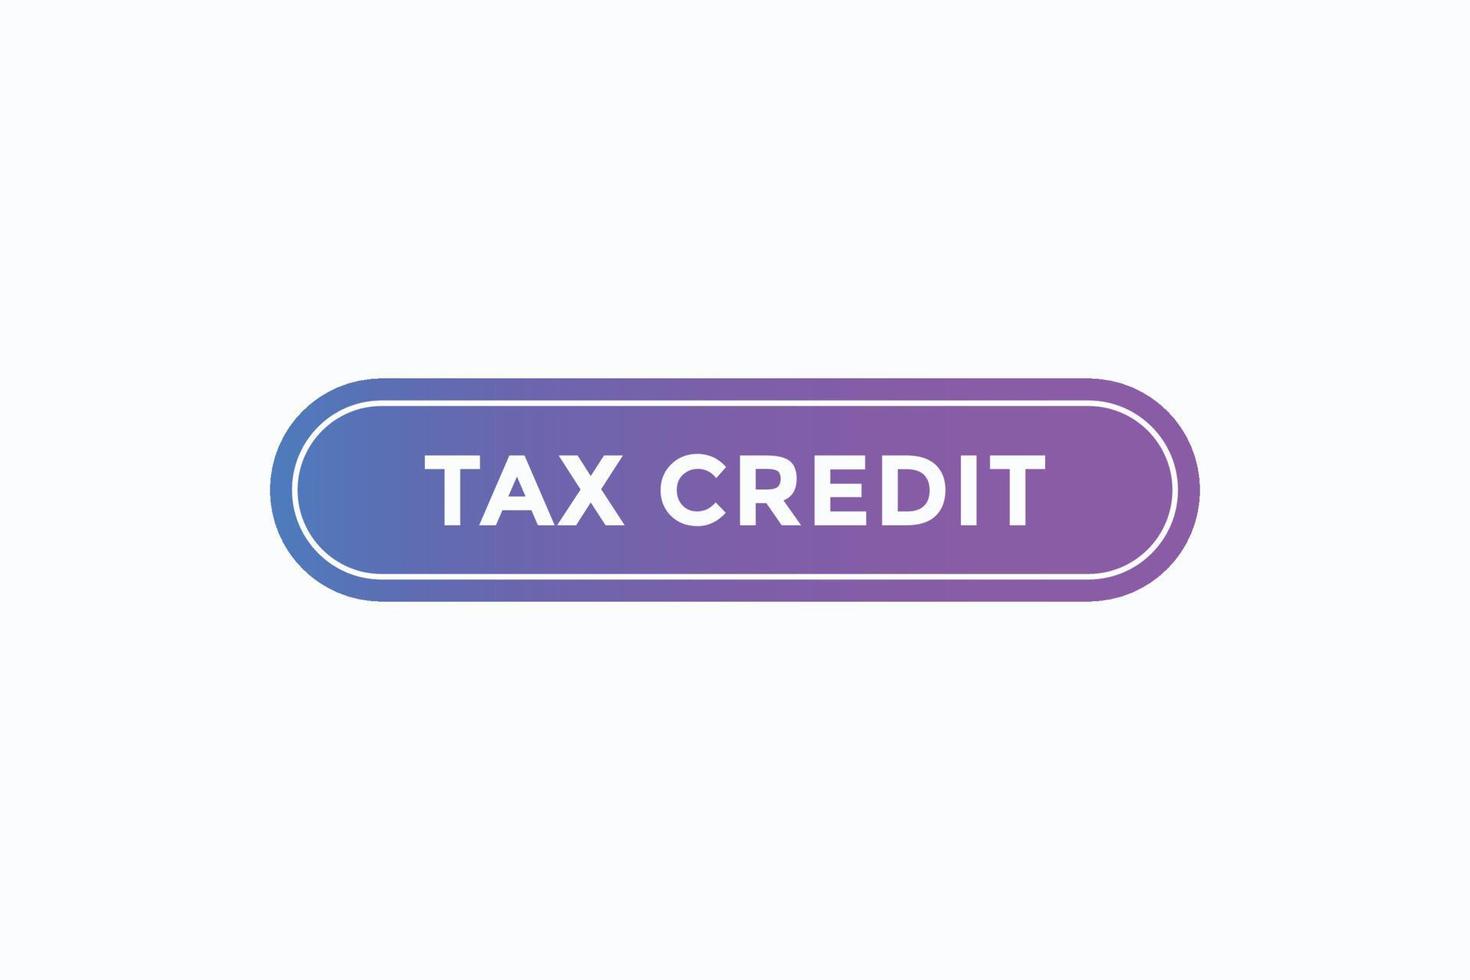 tax credit button vectors.sign label speech bubble tax credit vector